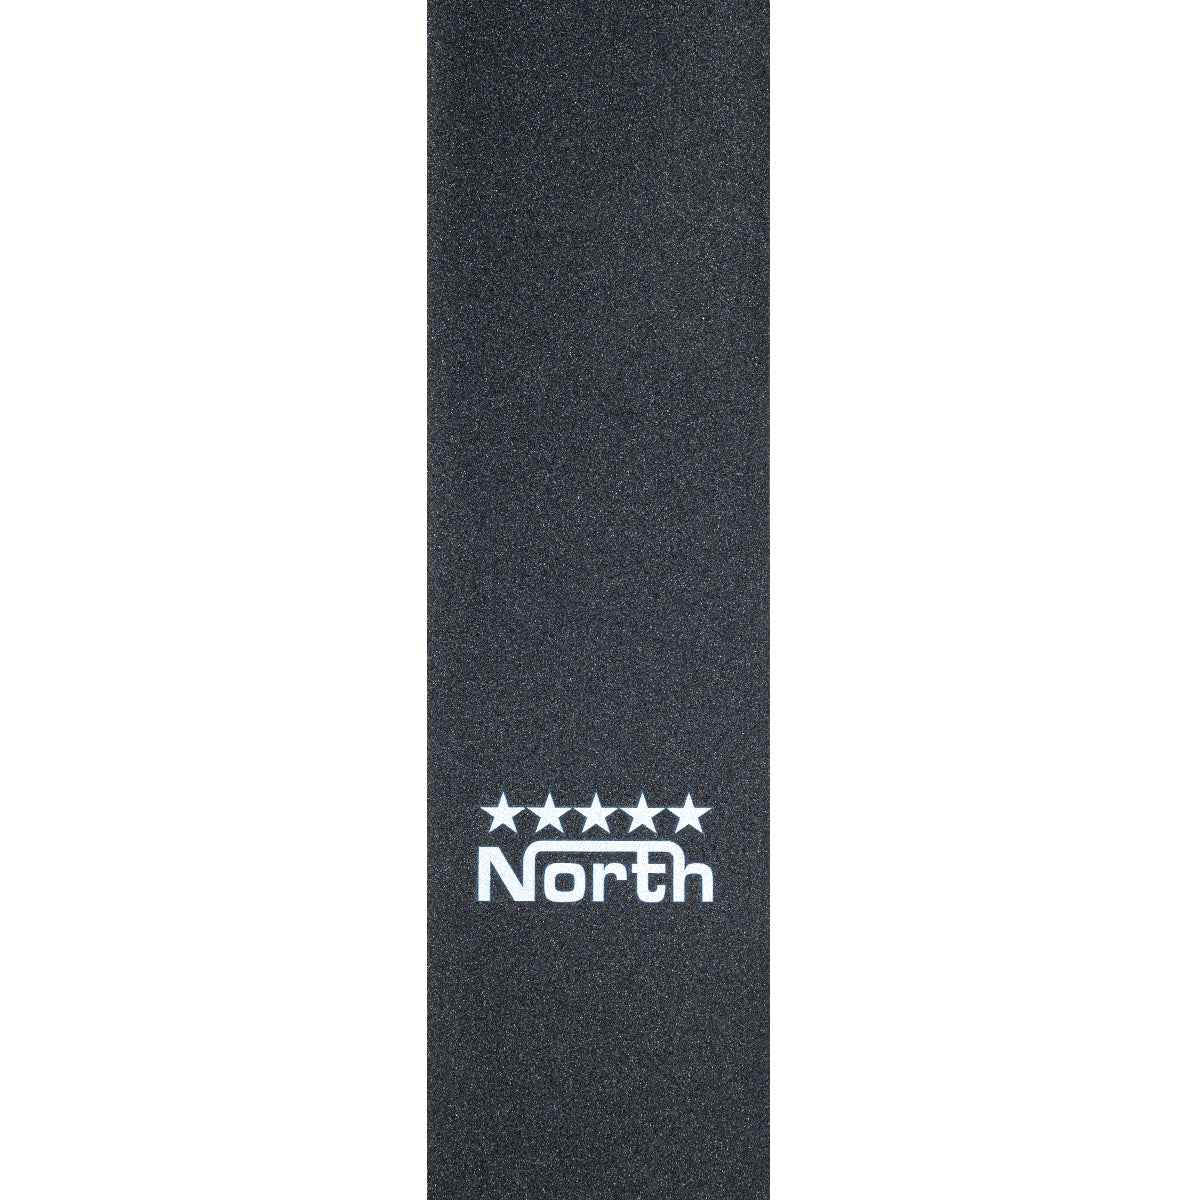 North 5 Star Grip Tape